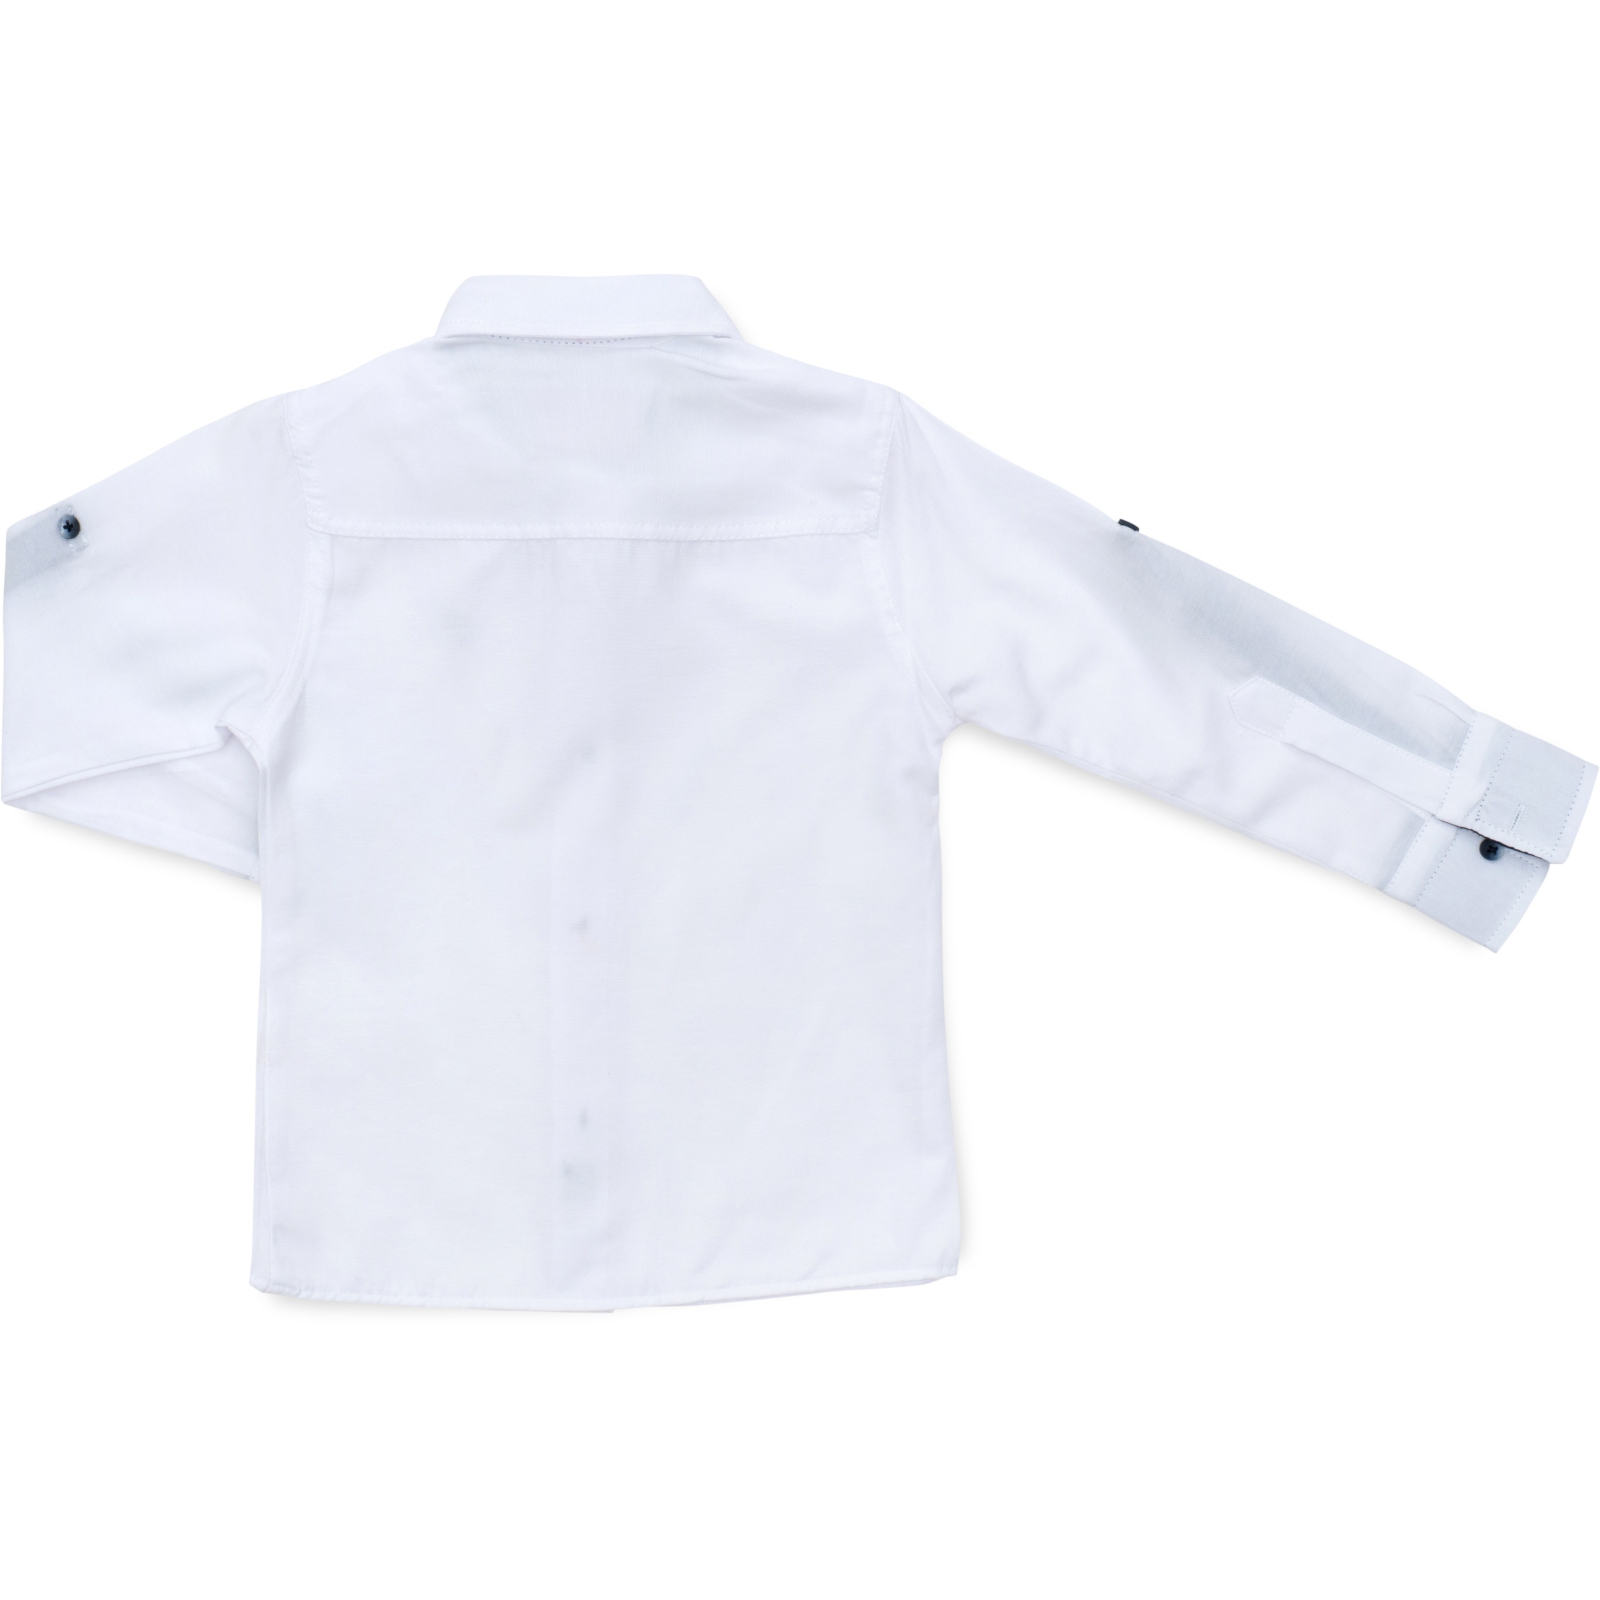 Рубашка Breeze школьная (G-406-104B-white) изображение 3